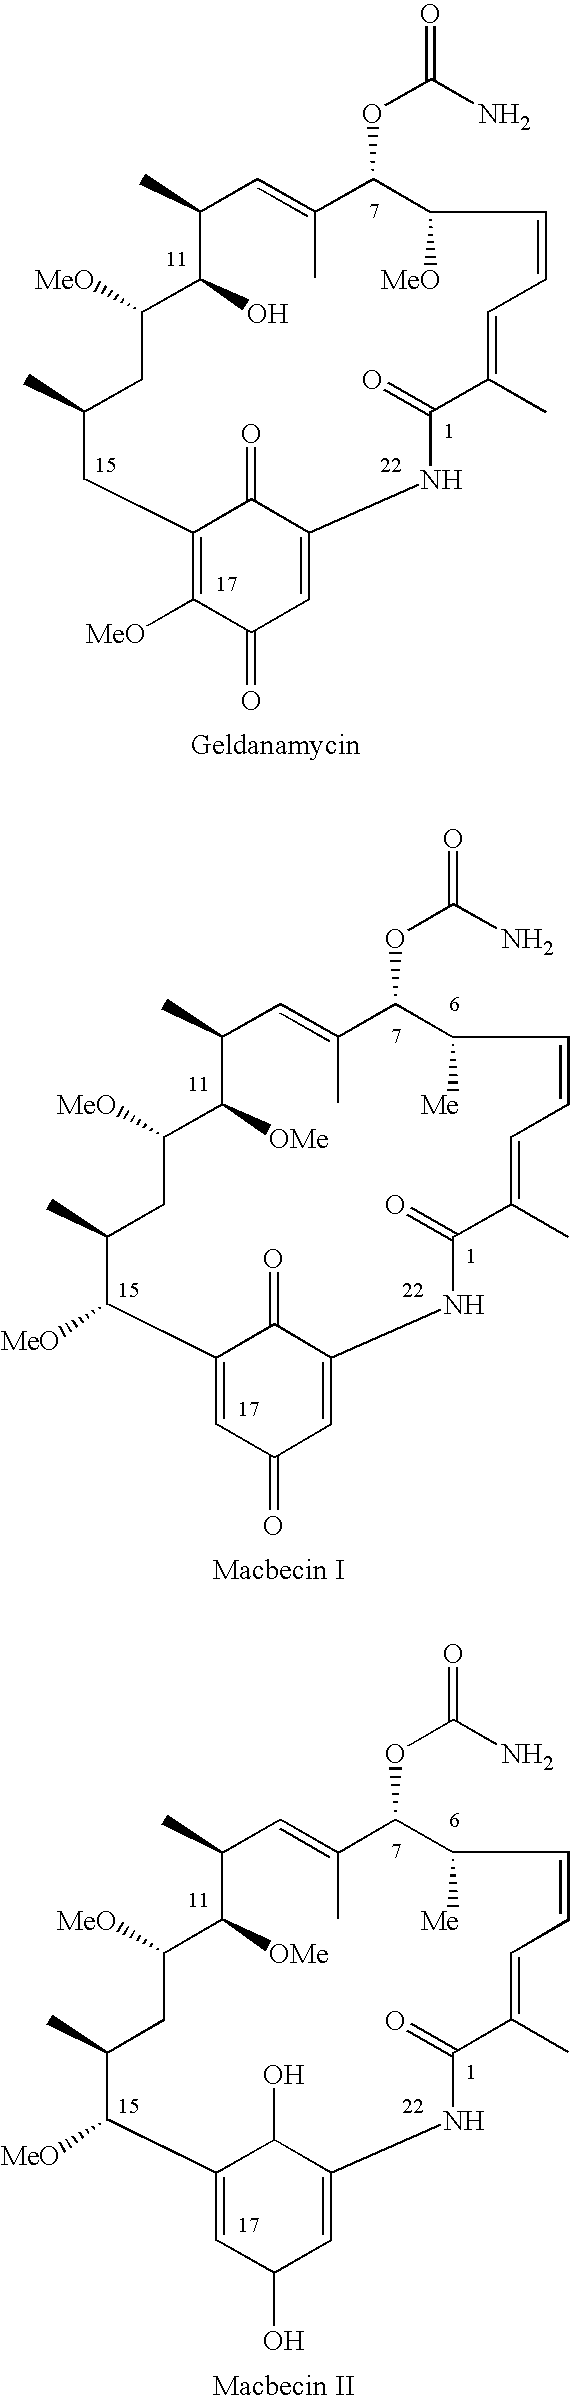 11-O-methylgeldanamycin compounds